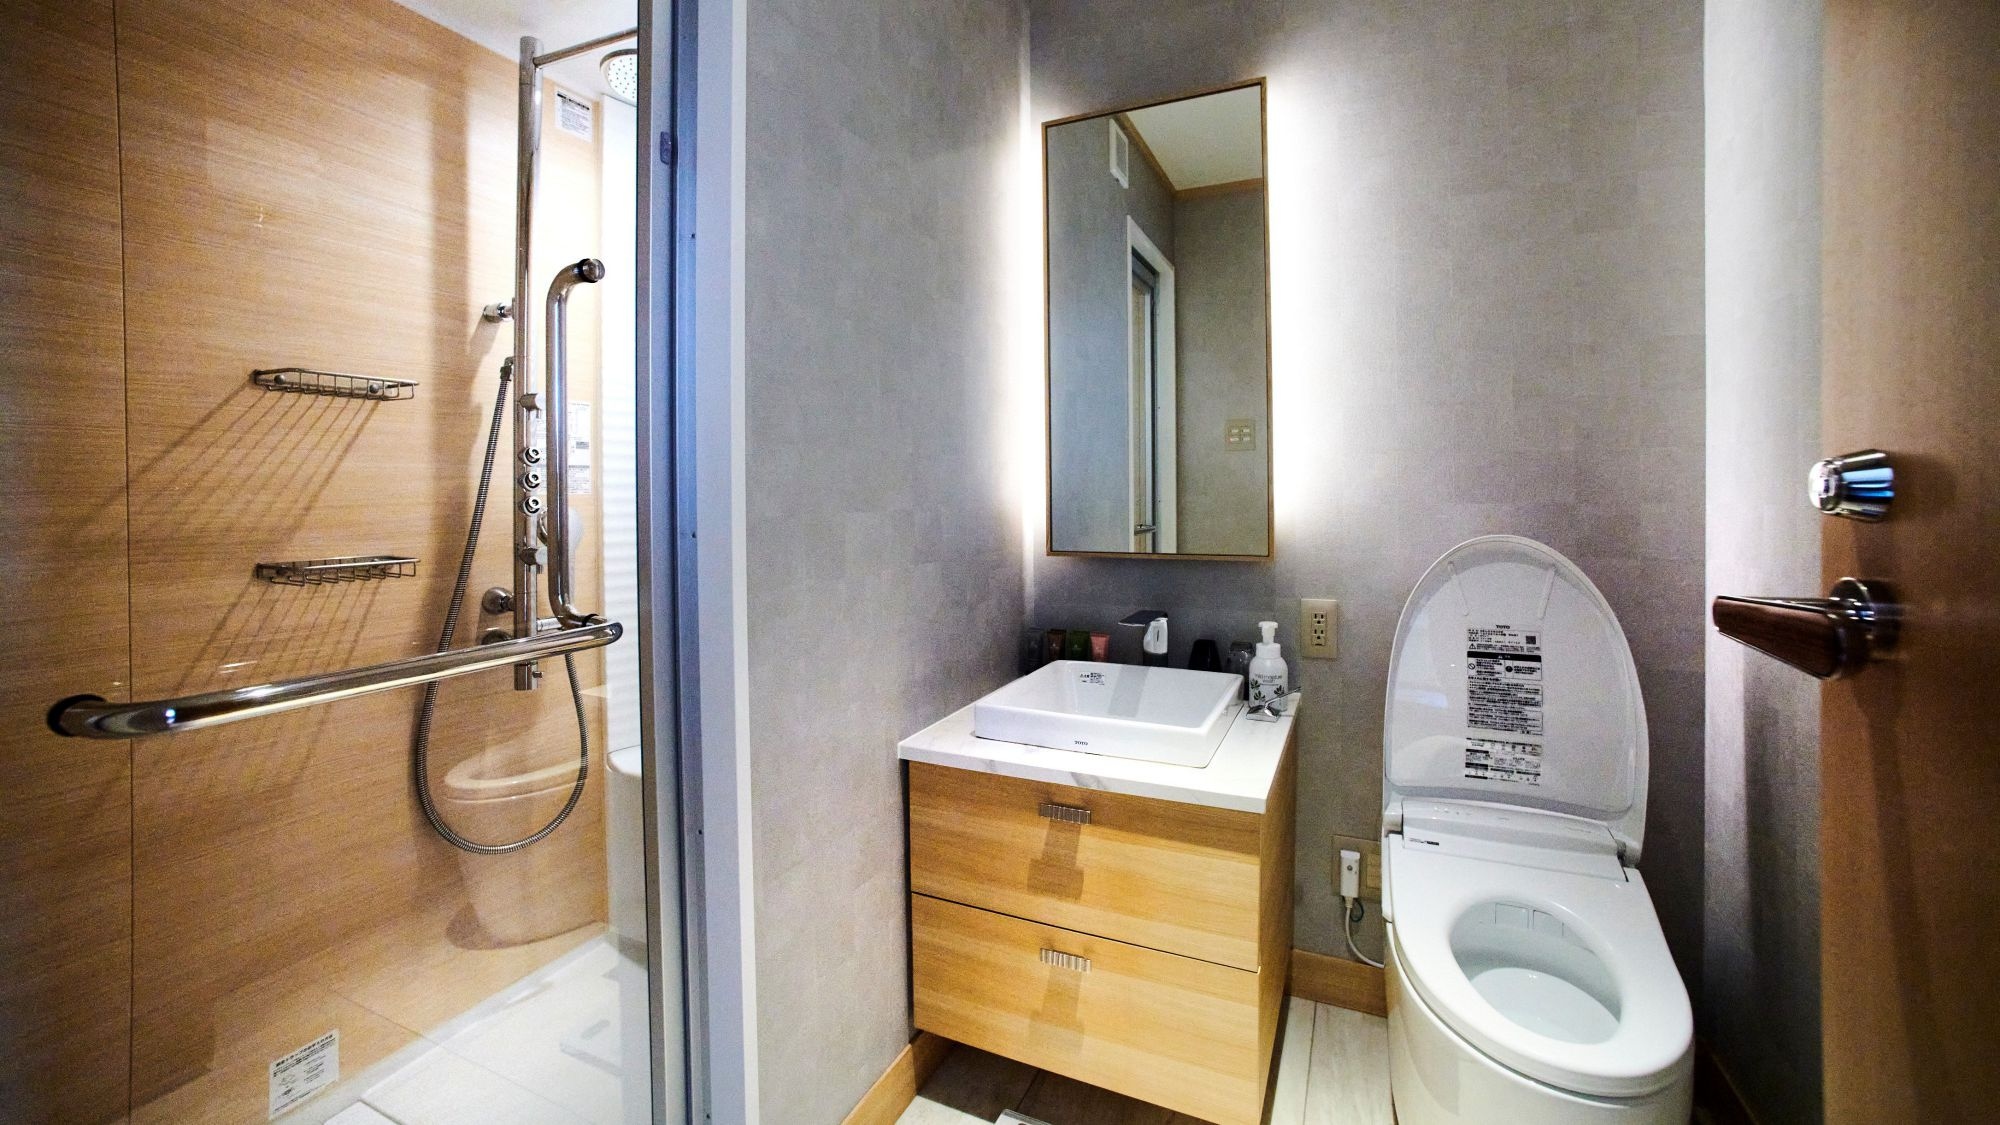 ■ Kamar mandi dan kamar mandi "Hotel Enoshima".